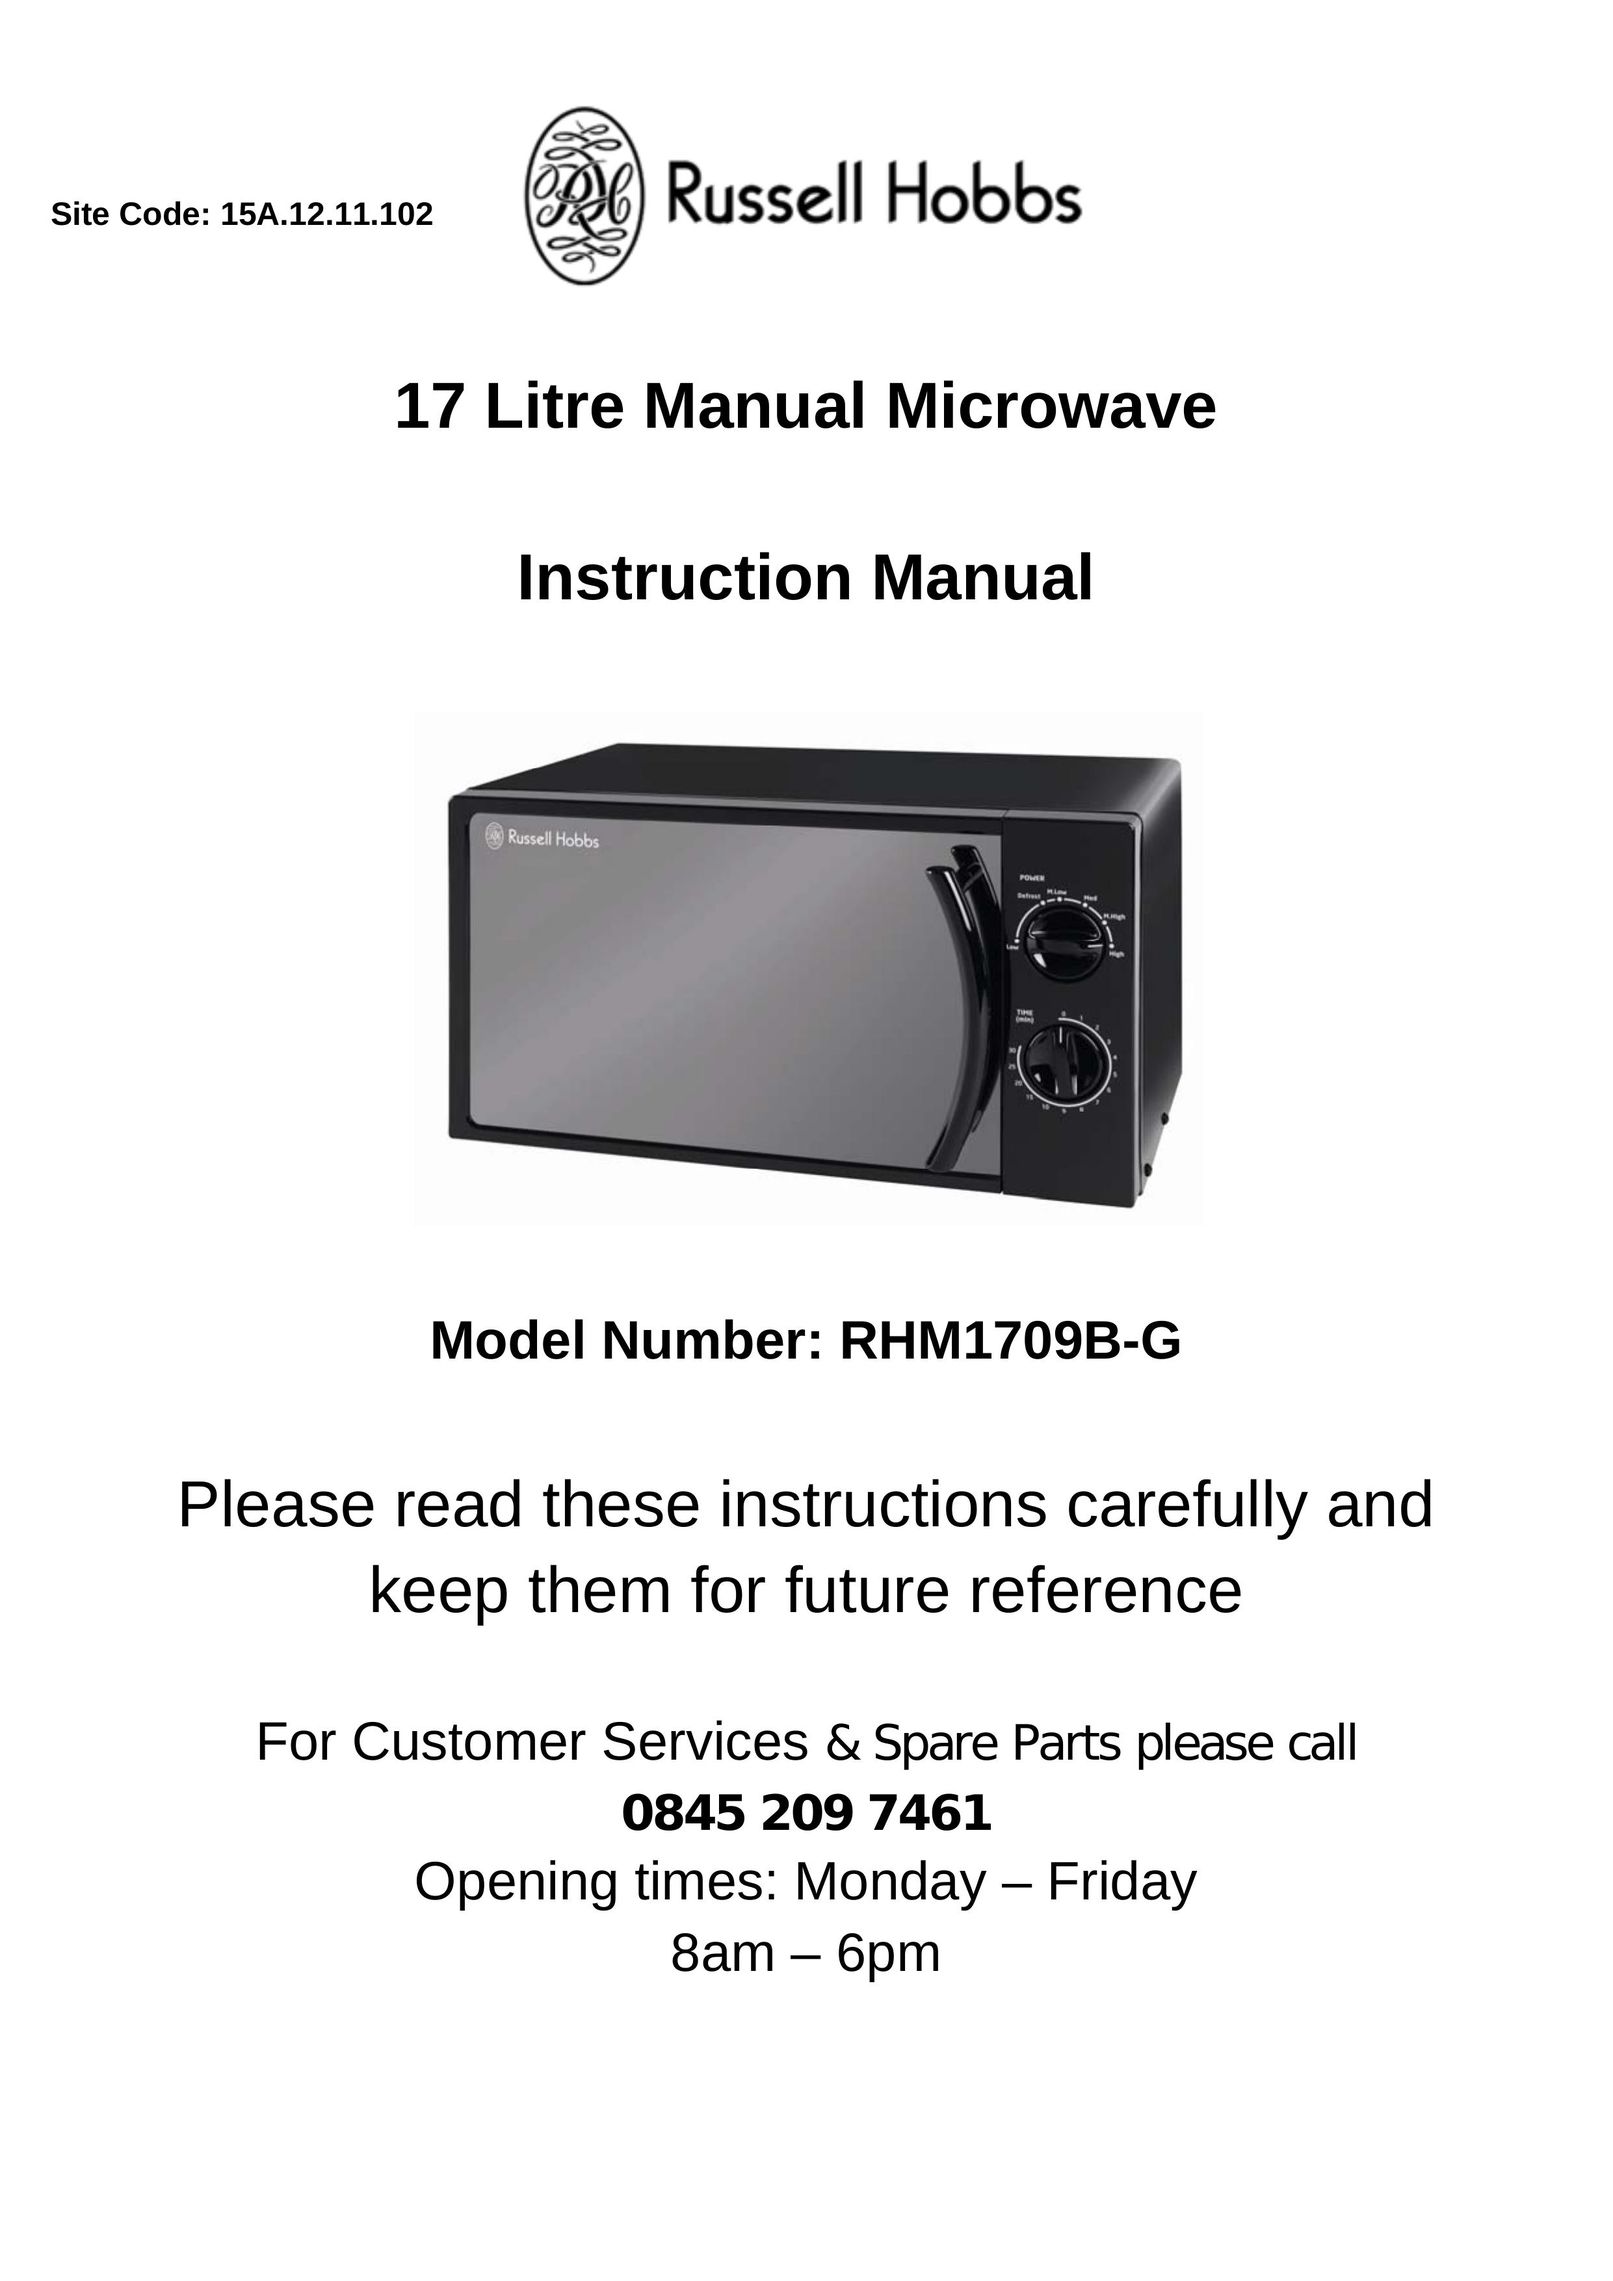 Russell Hobbs RHM1709B-G Microwave Oven User Manual